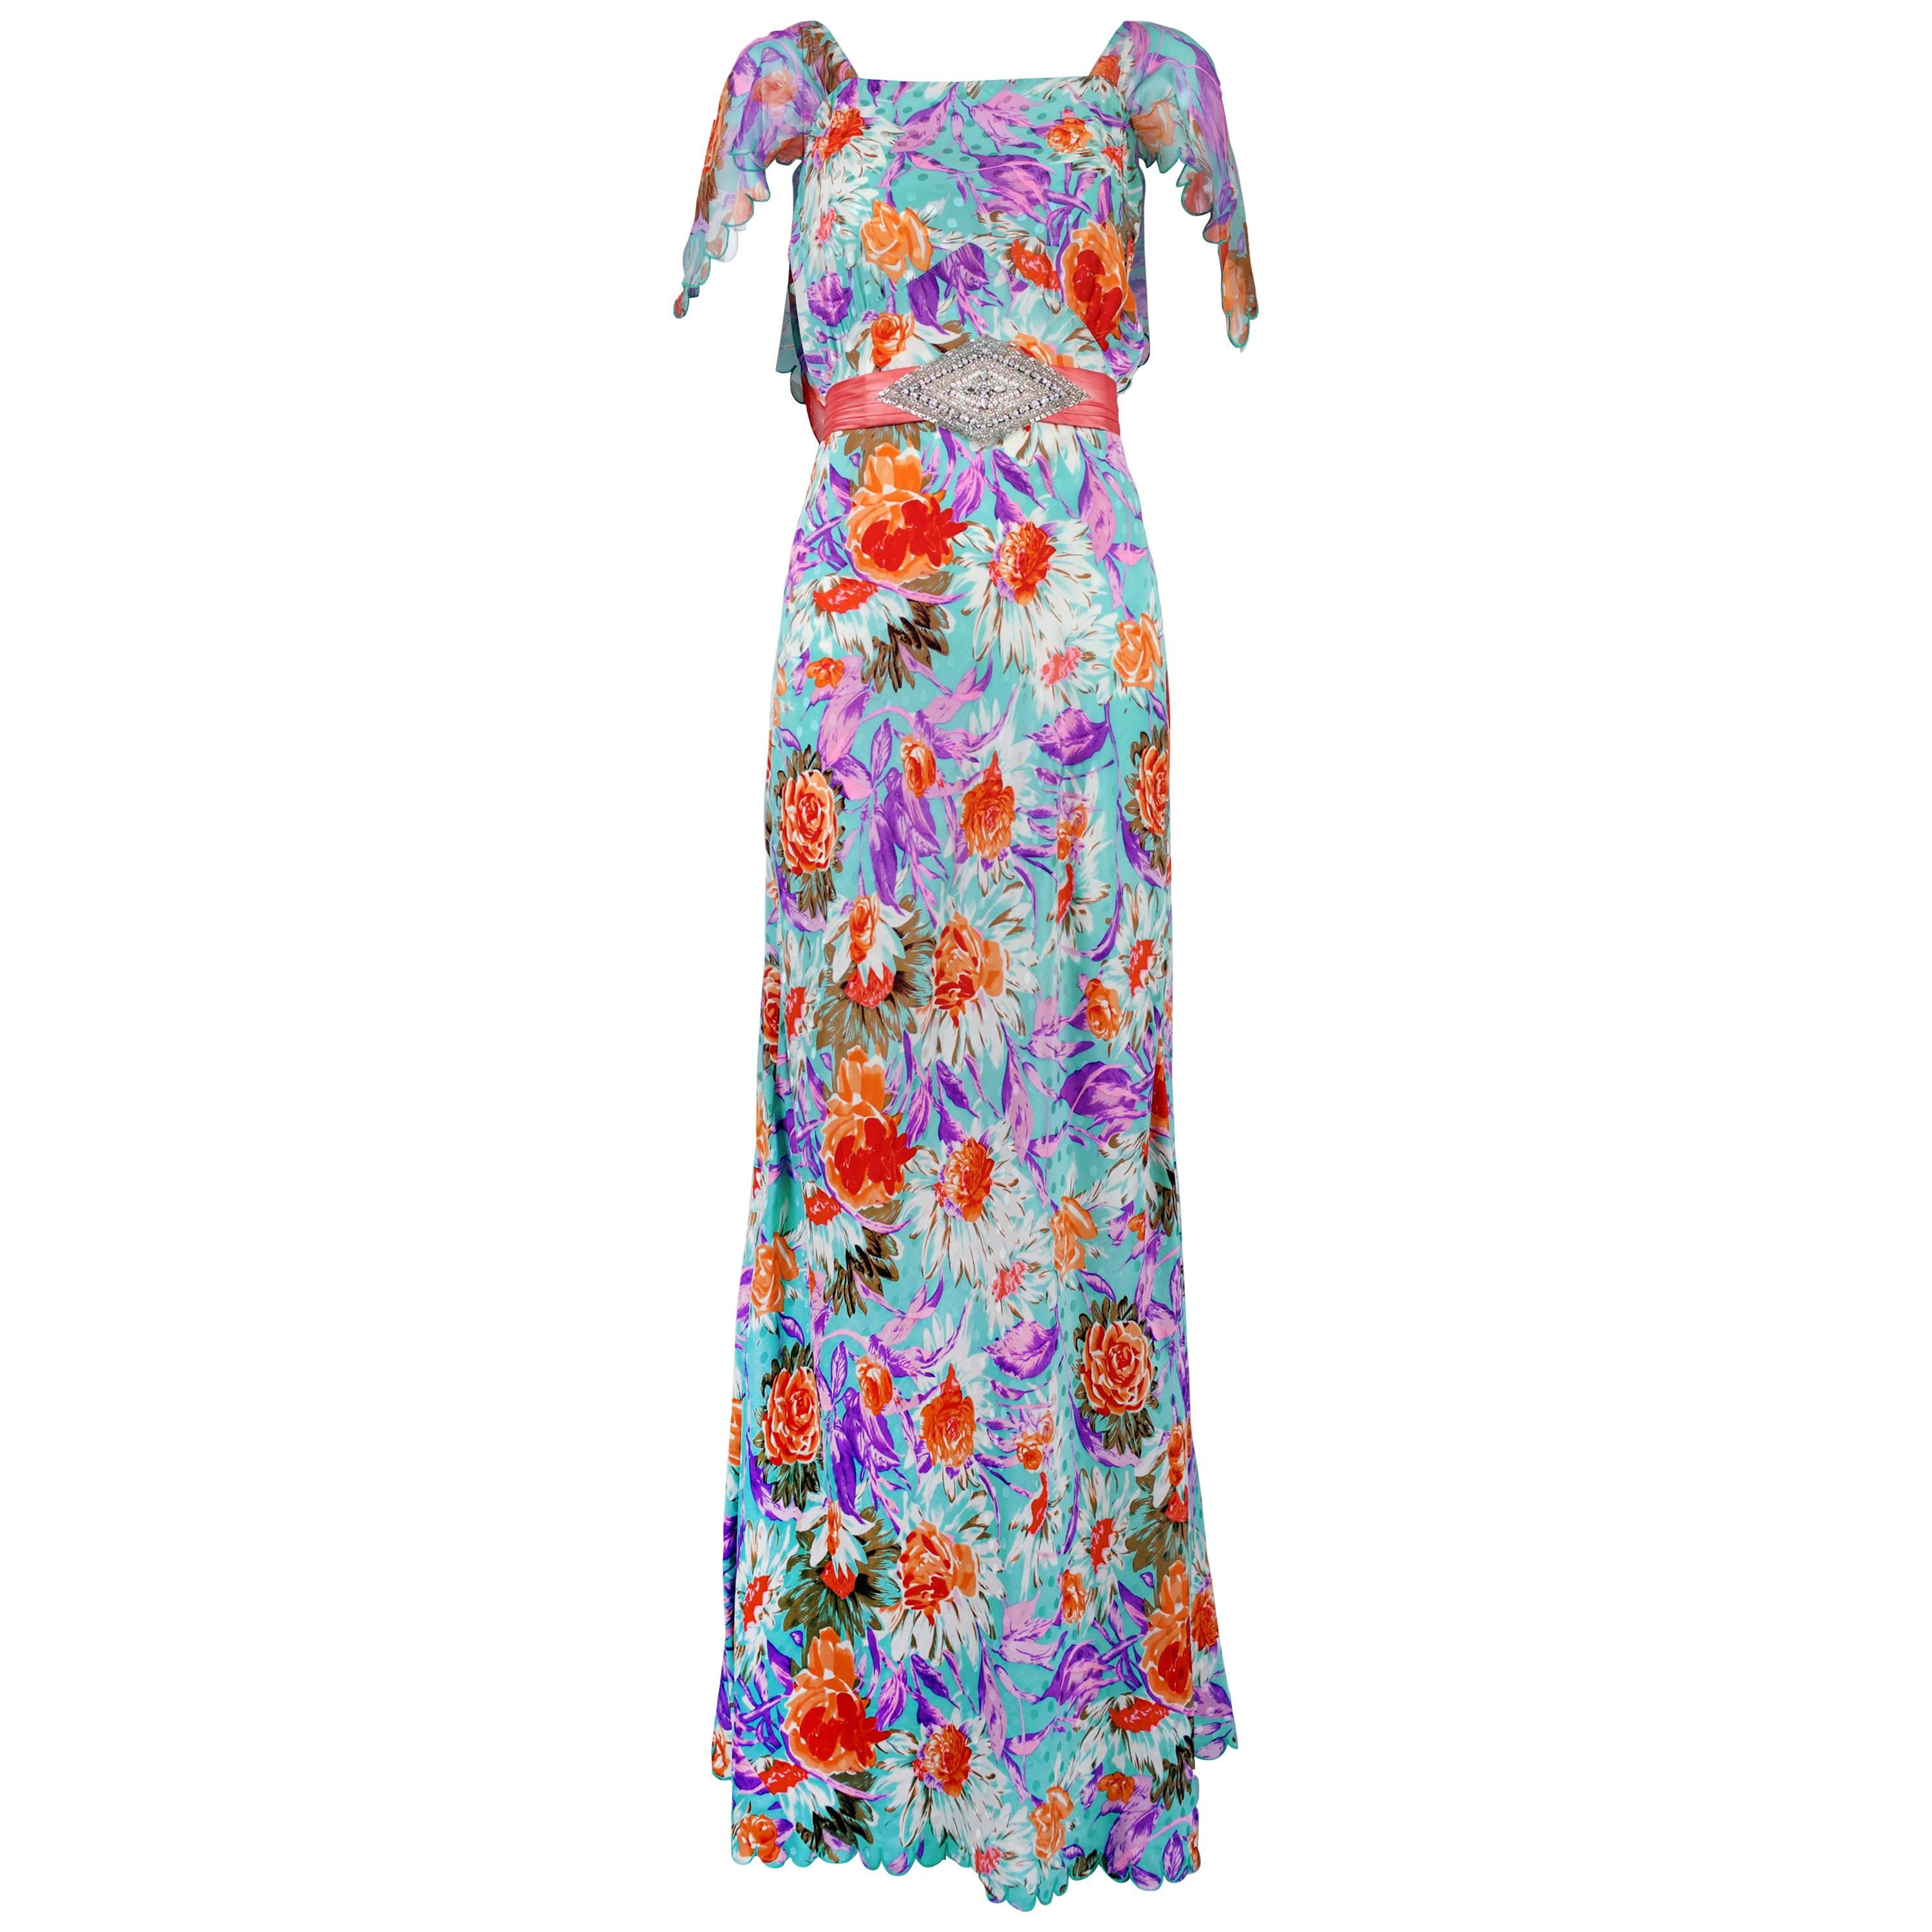 Tracy Feith 100% Silk Floral Bias Cut 1930's Inspired Evening Gown w/Mermaid Hem